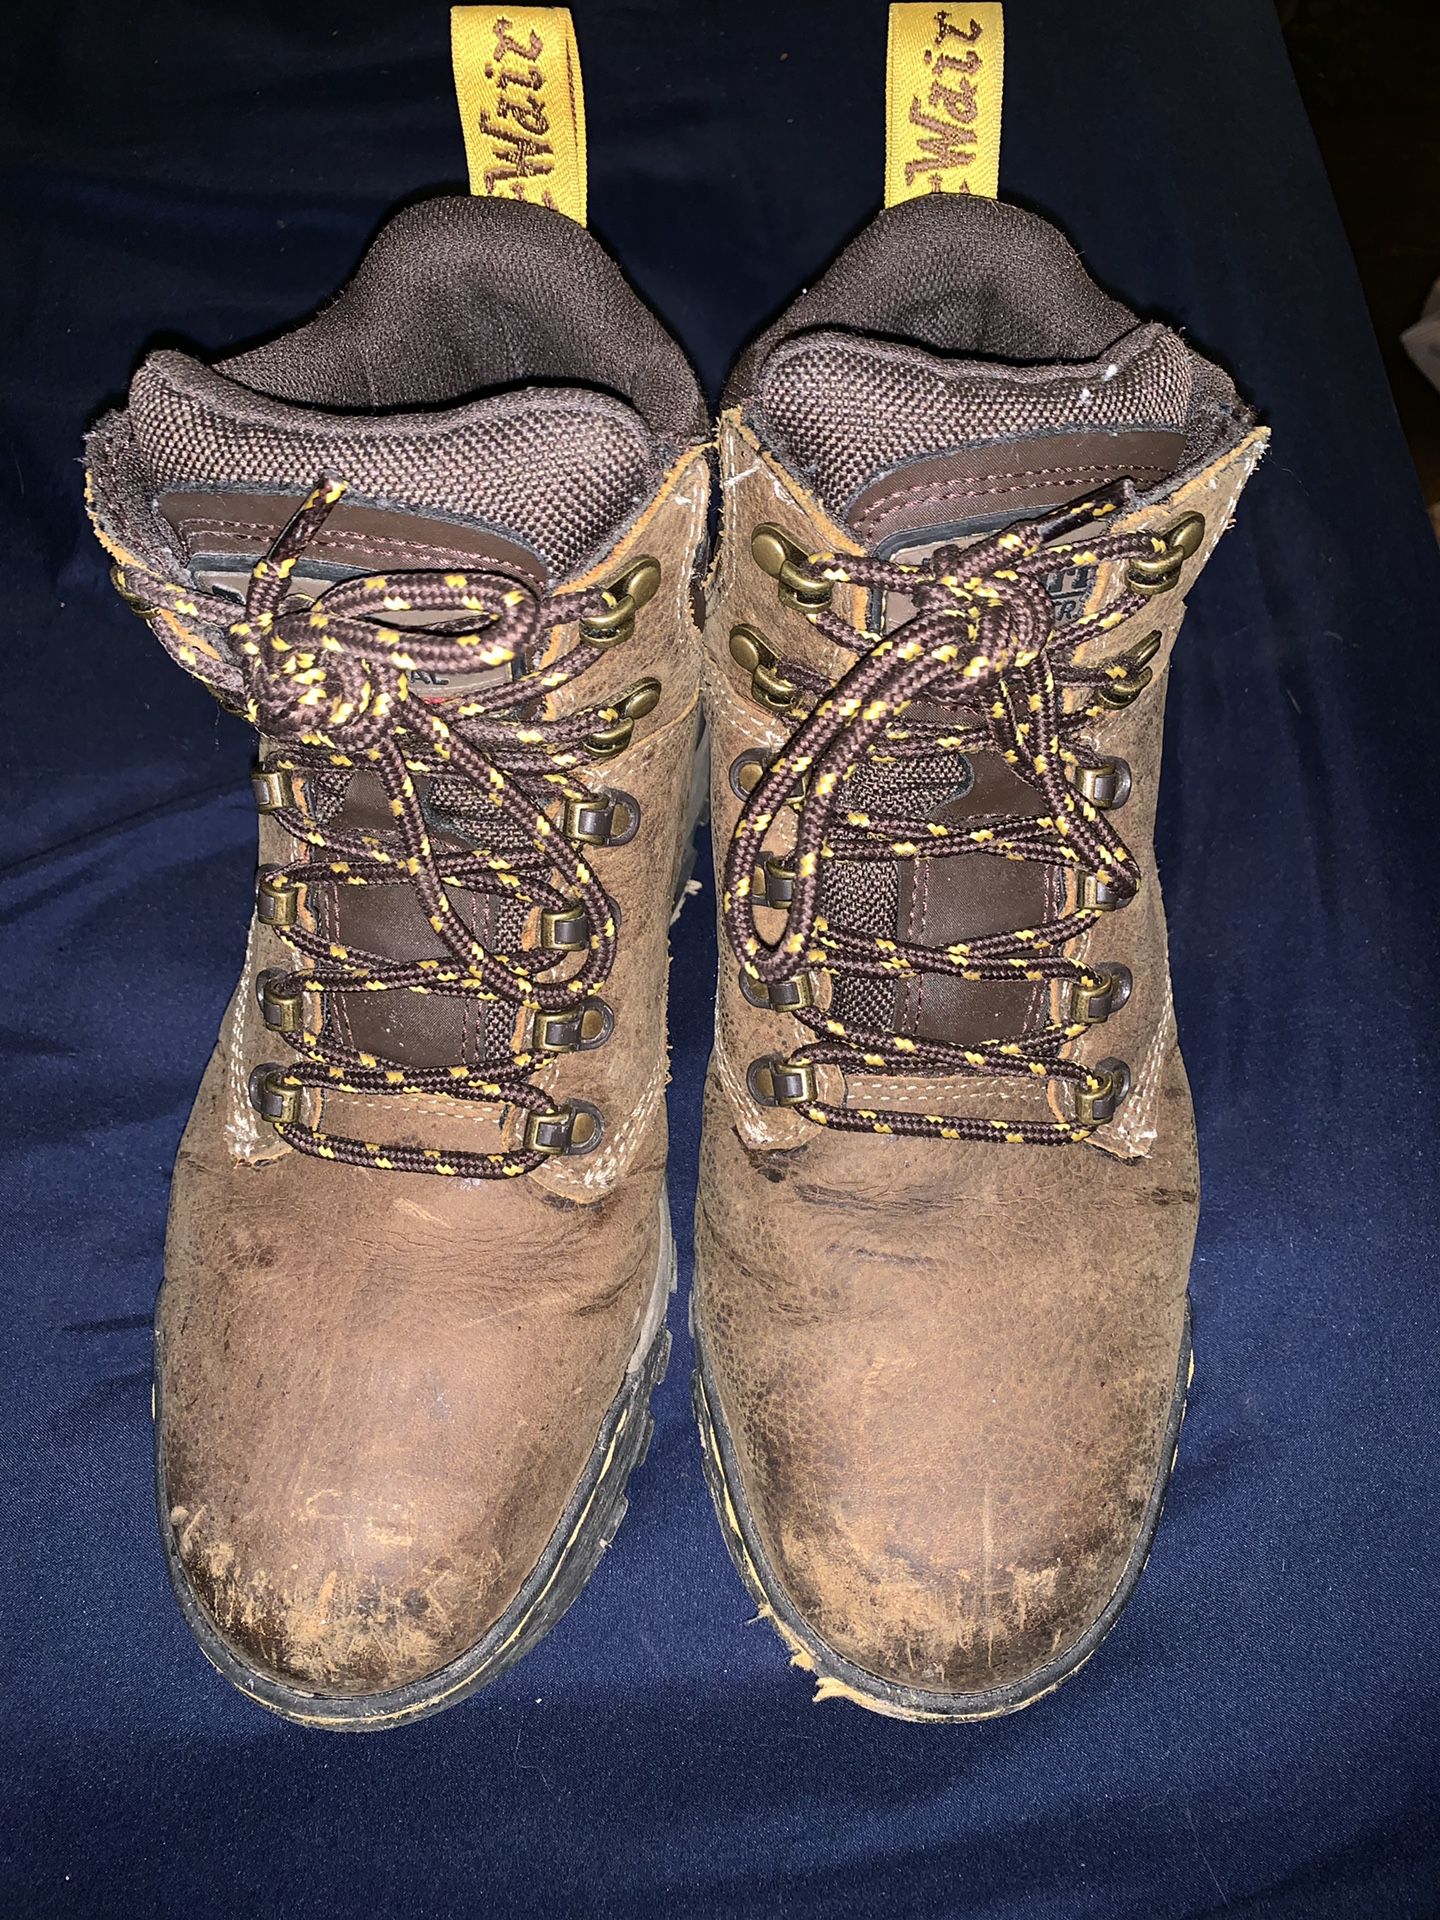 Doc Martens work boots